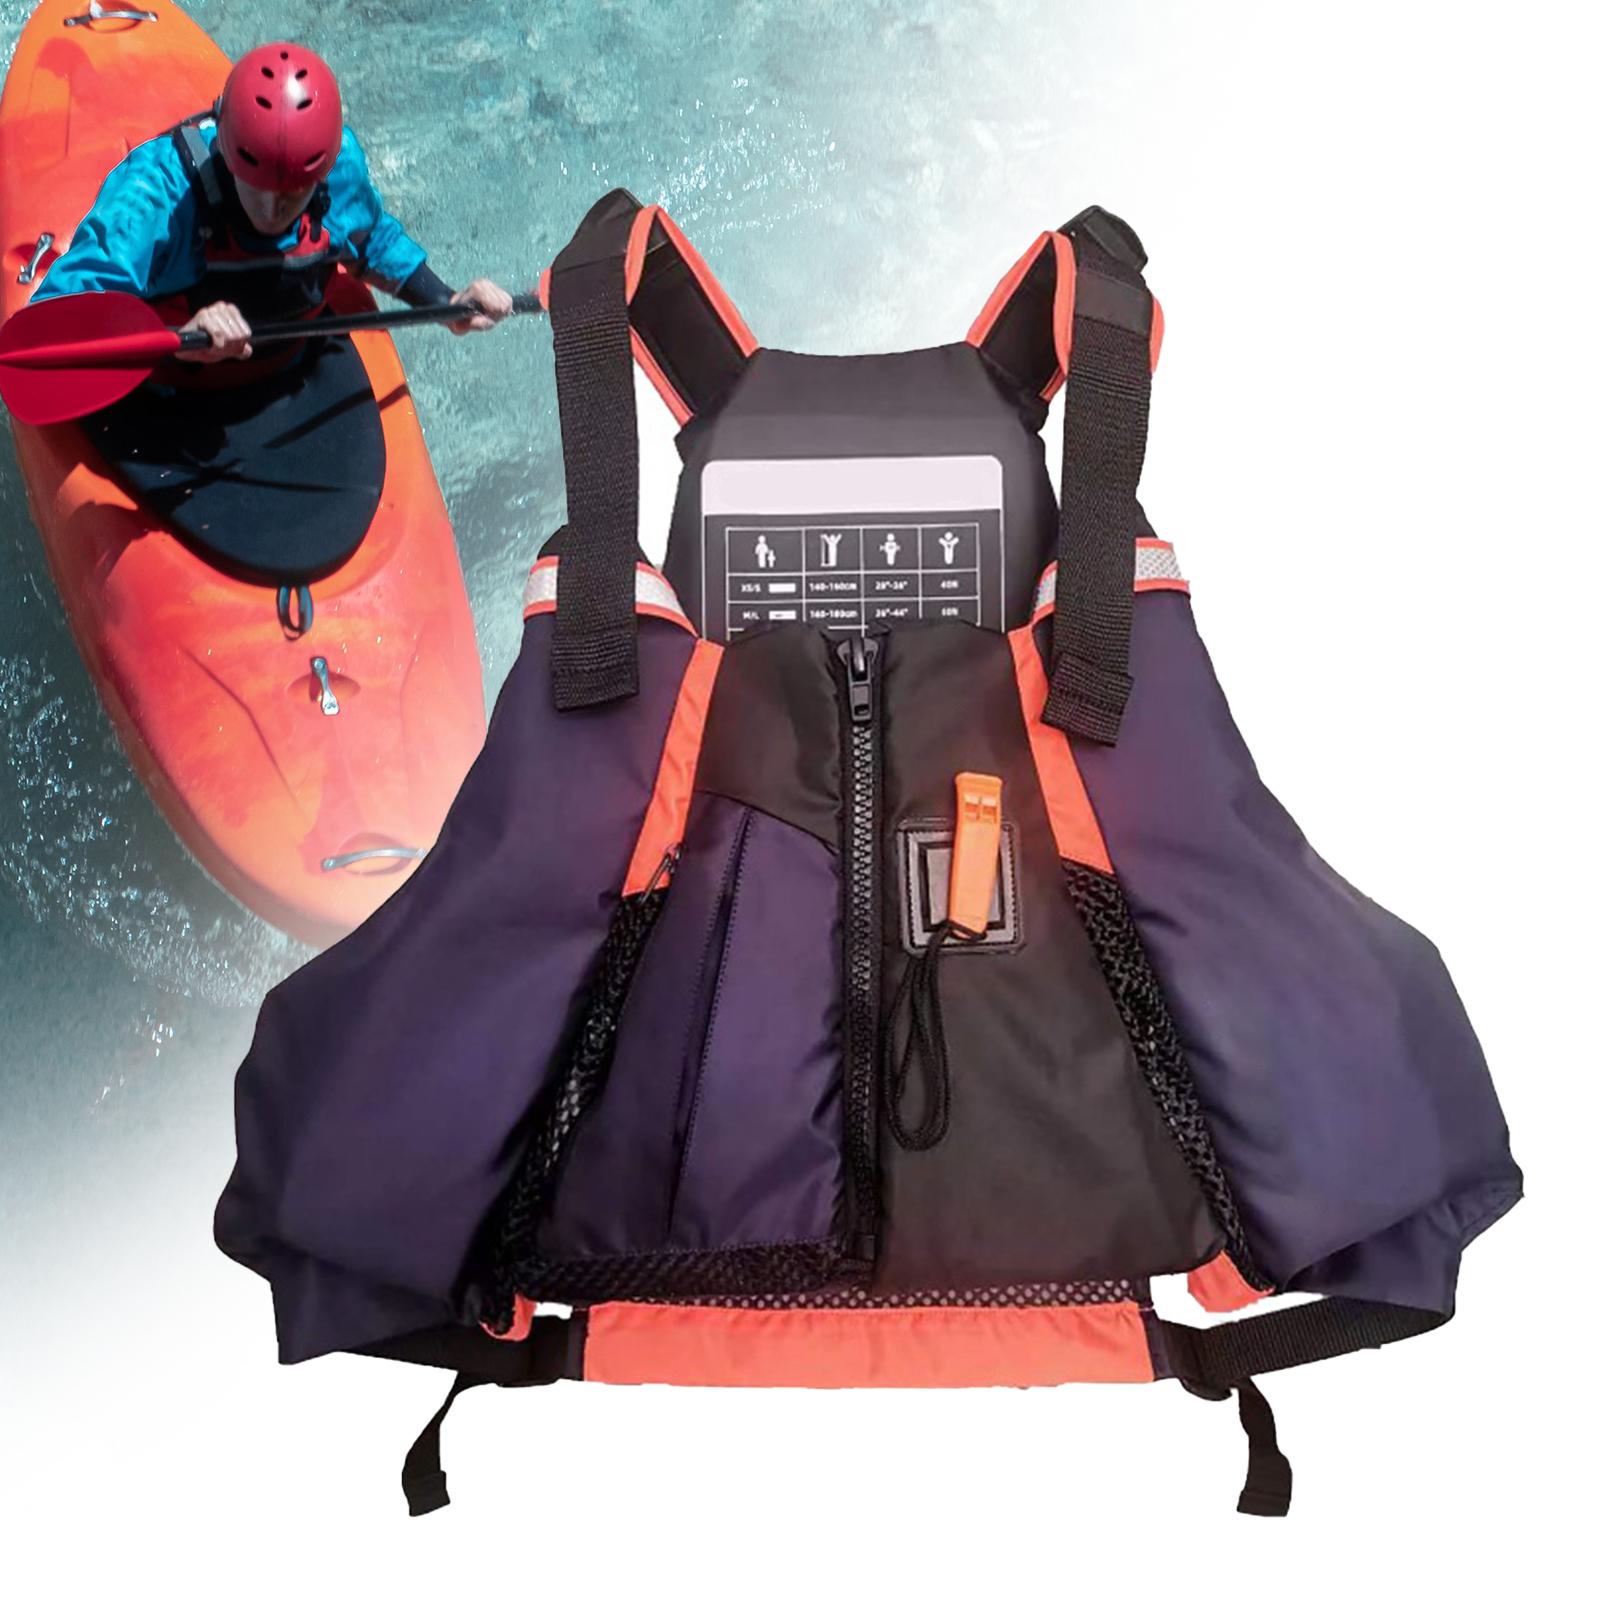 Kayak Life Jacket Swimming Vest Waterproof Portable Breathable Survival Suit XL XXL Navy Blue Purple